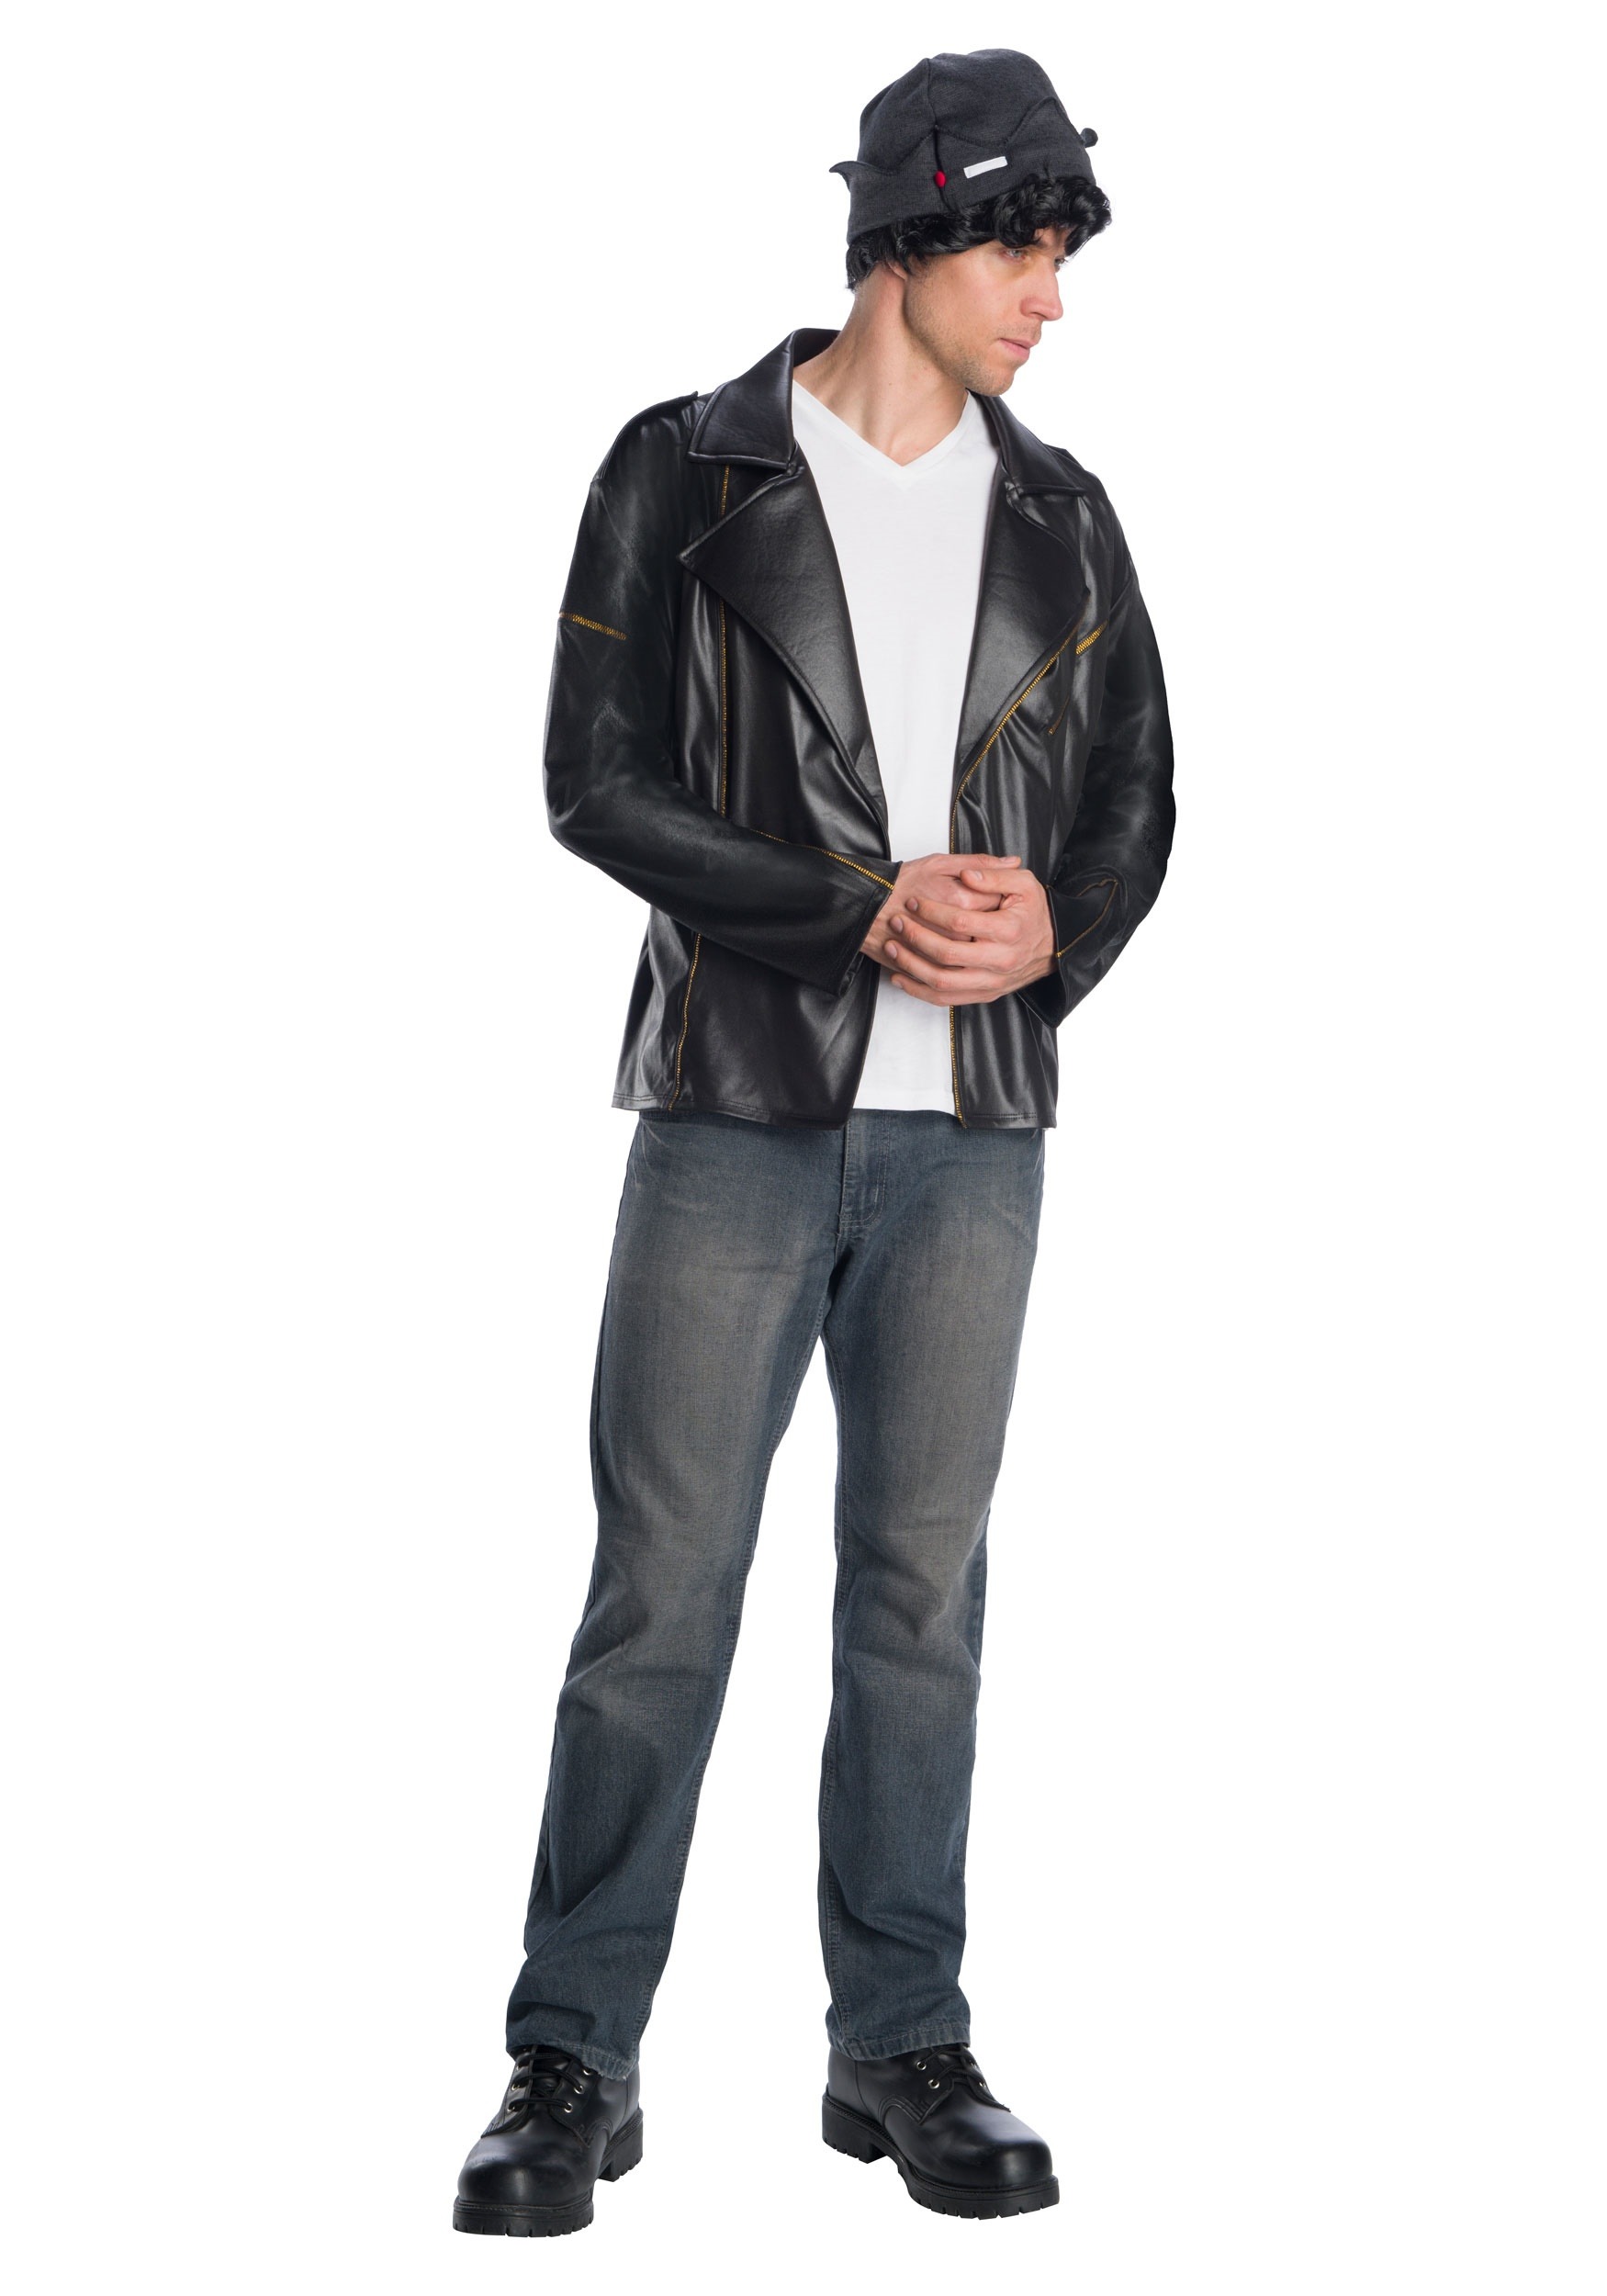 Image of Riverdale Jughead Jones Adult Costume ID RU700054-XL